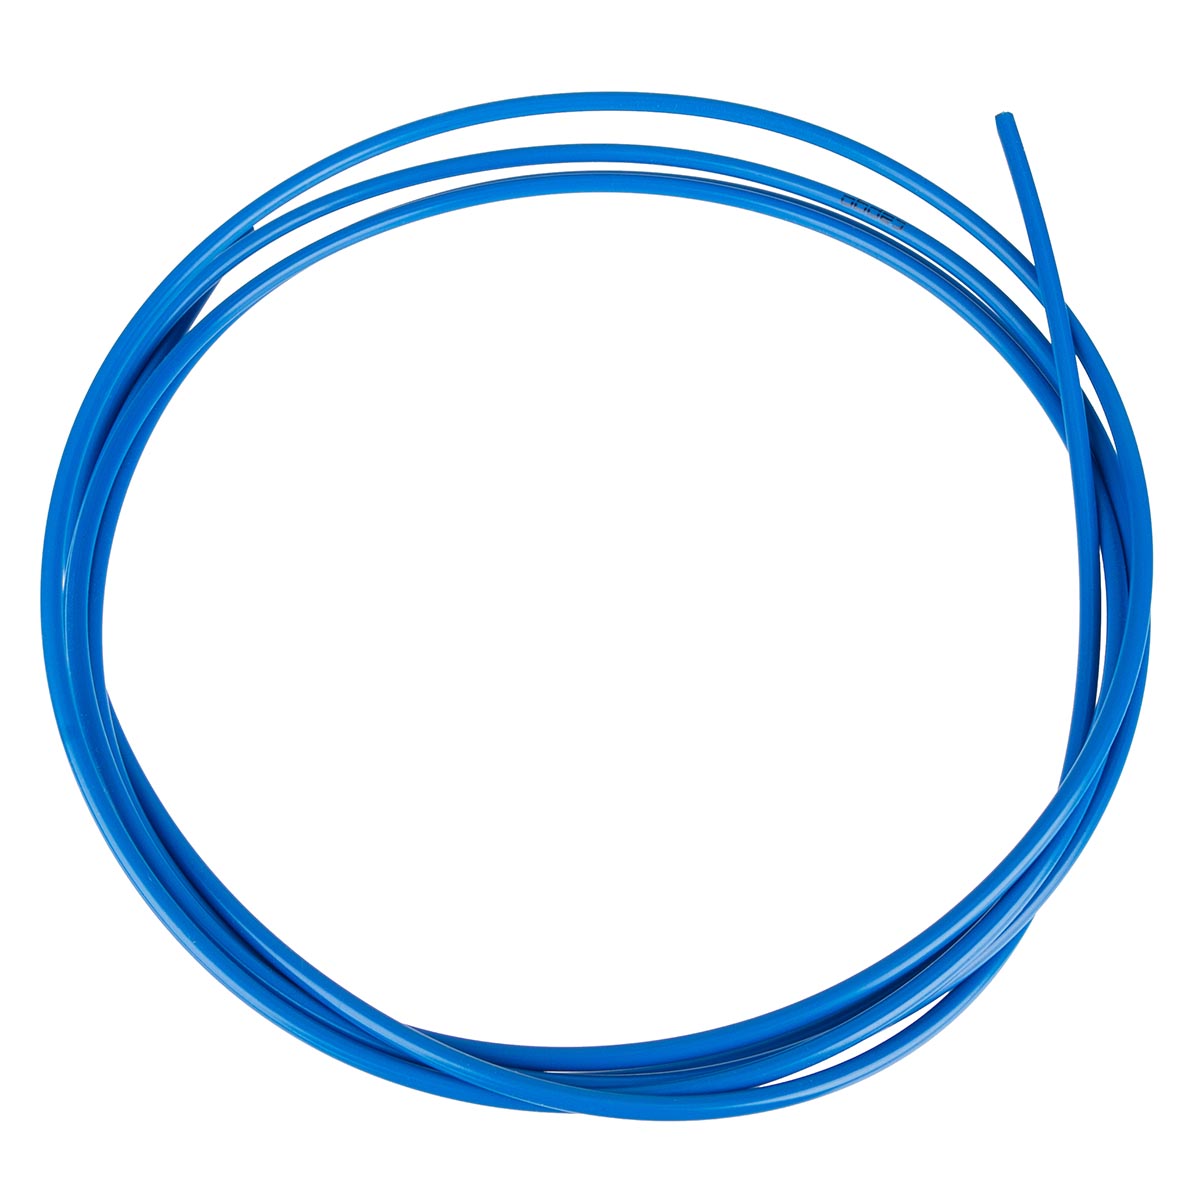 Capgo Cable Systems Schaltaußenhülle Blue Line Dunkelblau